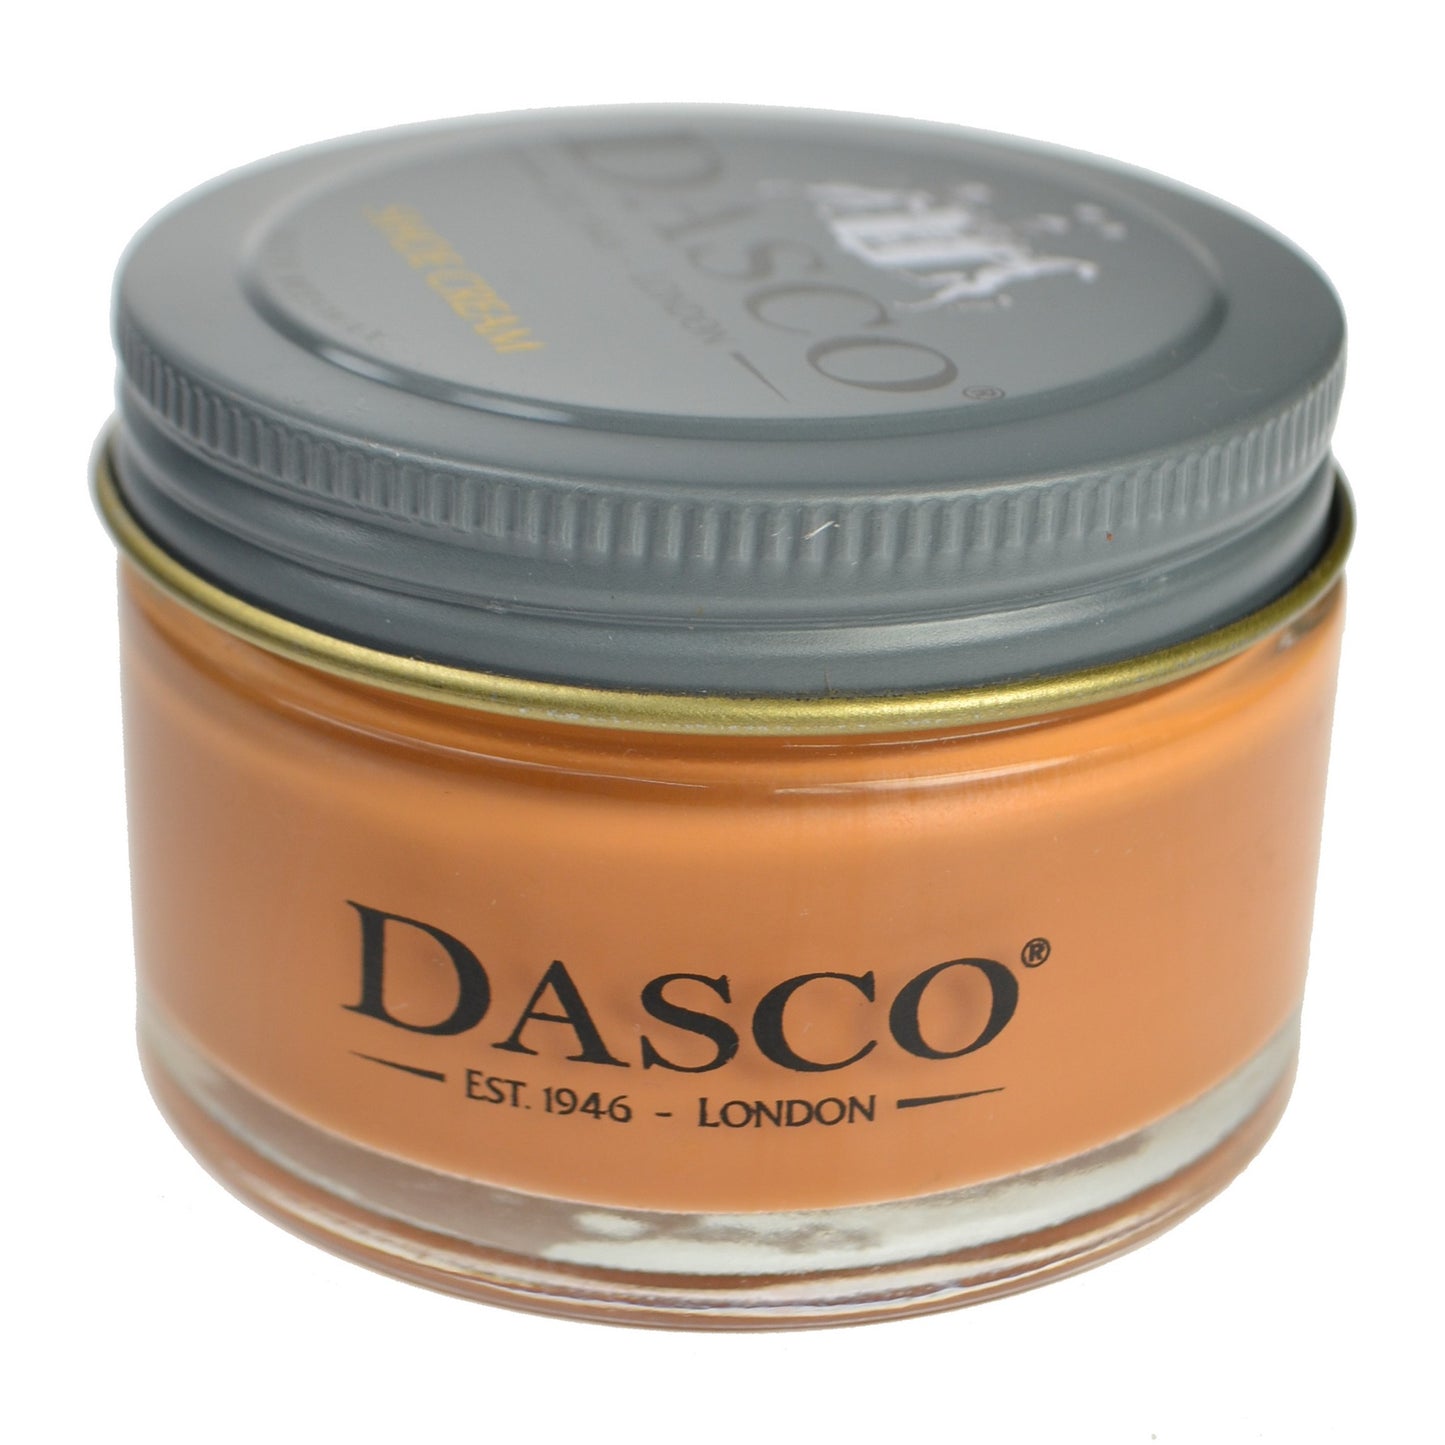 Dasco Shoe Cream Shoe Polish with Beeswax - Light Tan No.116